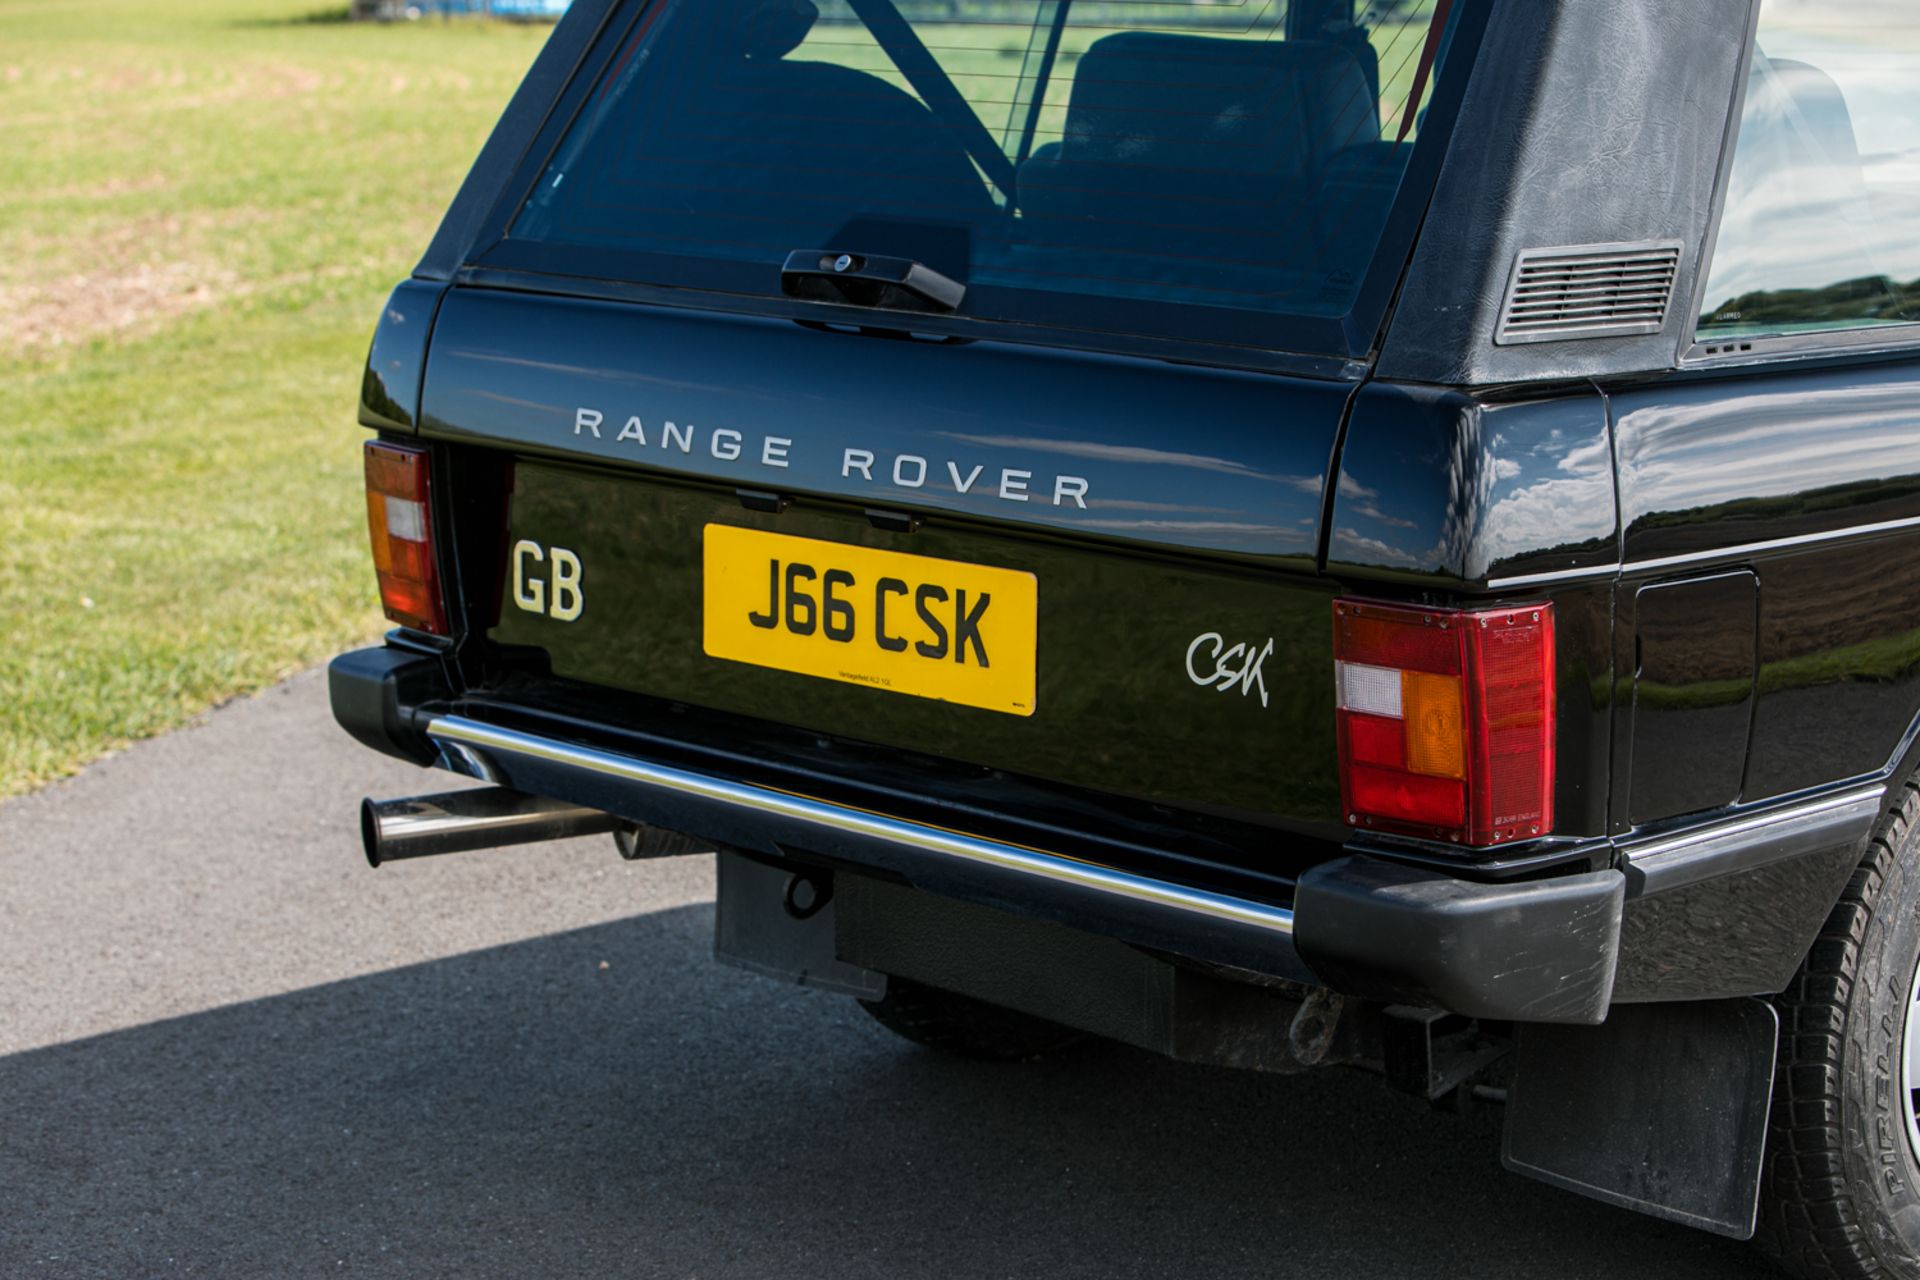 1991 Range Rover CSK - Image 23 of 27